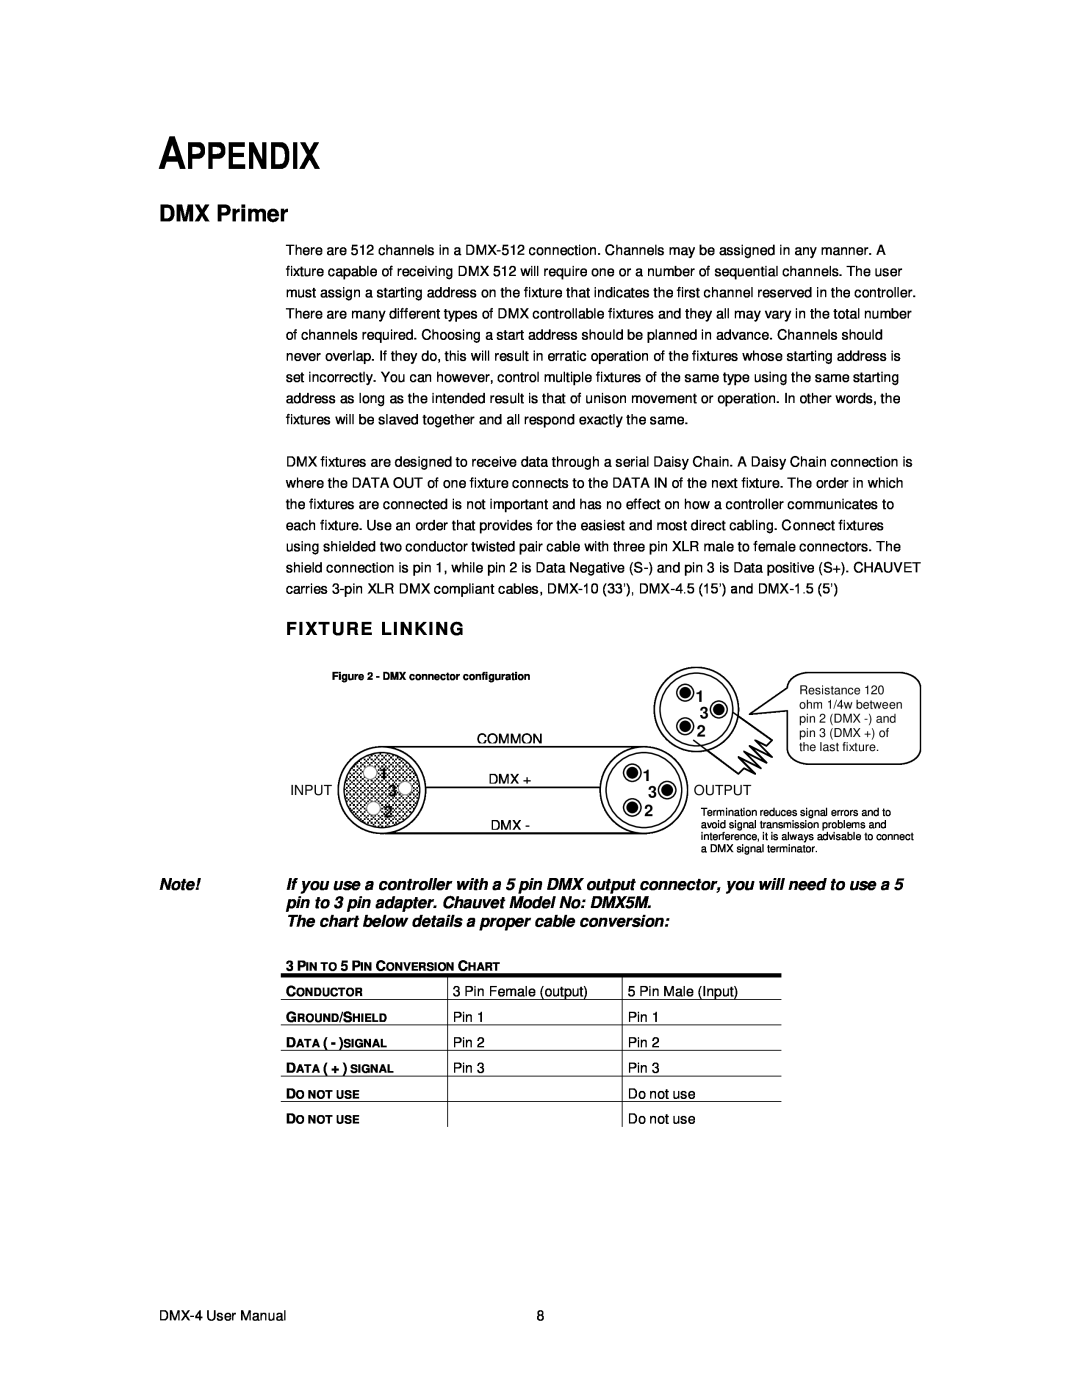 Chauvet DMX-4 user manual Appendix, DMX Primer, Fixt Ure Linking 